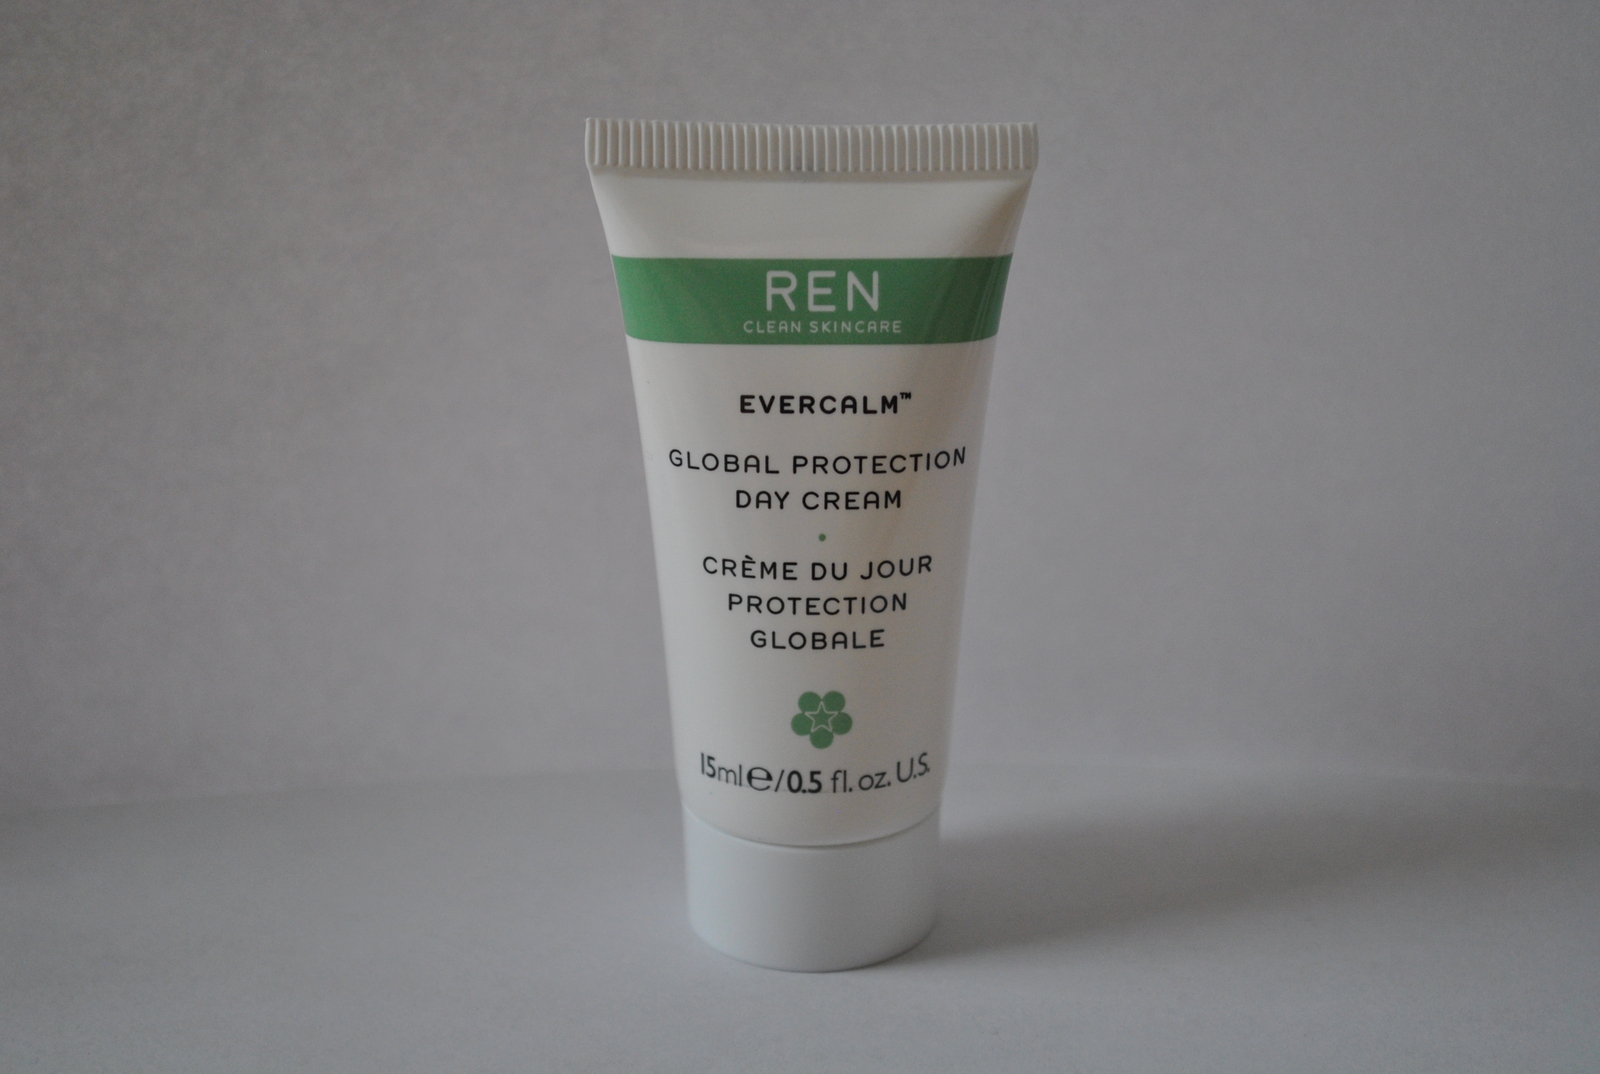 Ren Clean Skincare Evercalm Global Protection Day Cream 0.5 oz / 15 ml  - $14.99